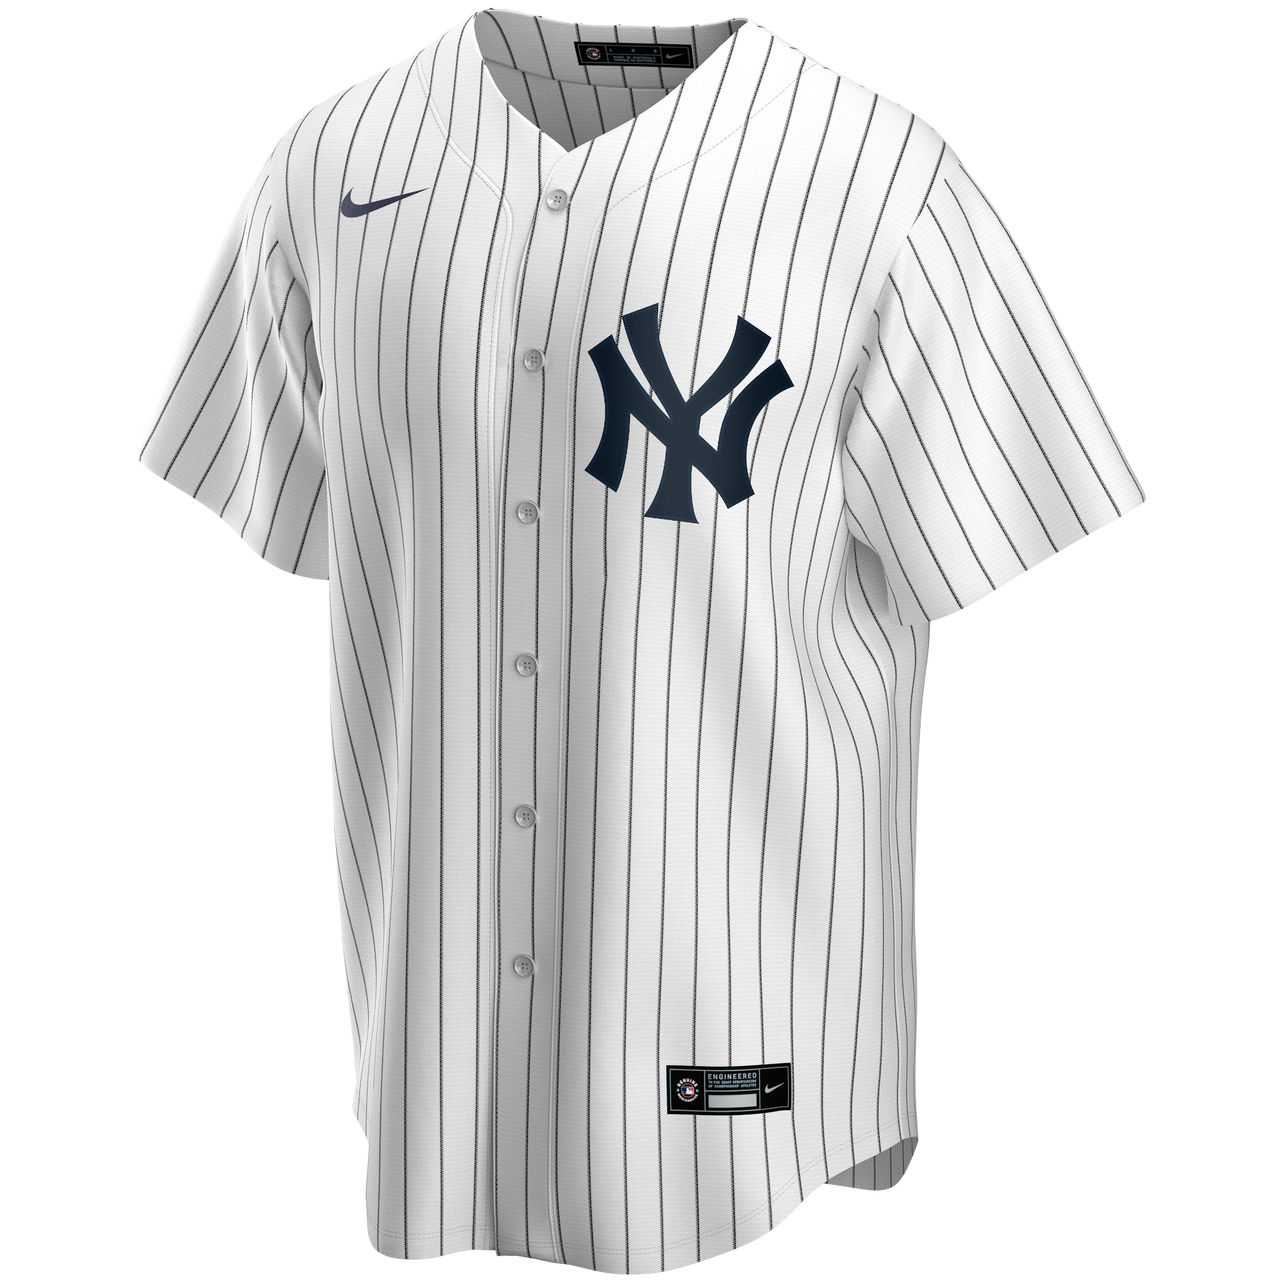 Aaron Judge Signed New York Yankees Jersey